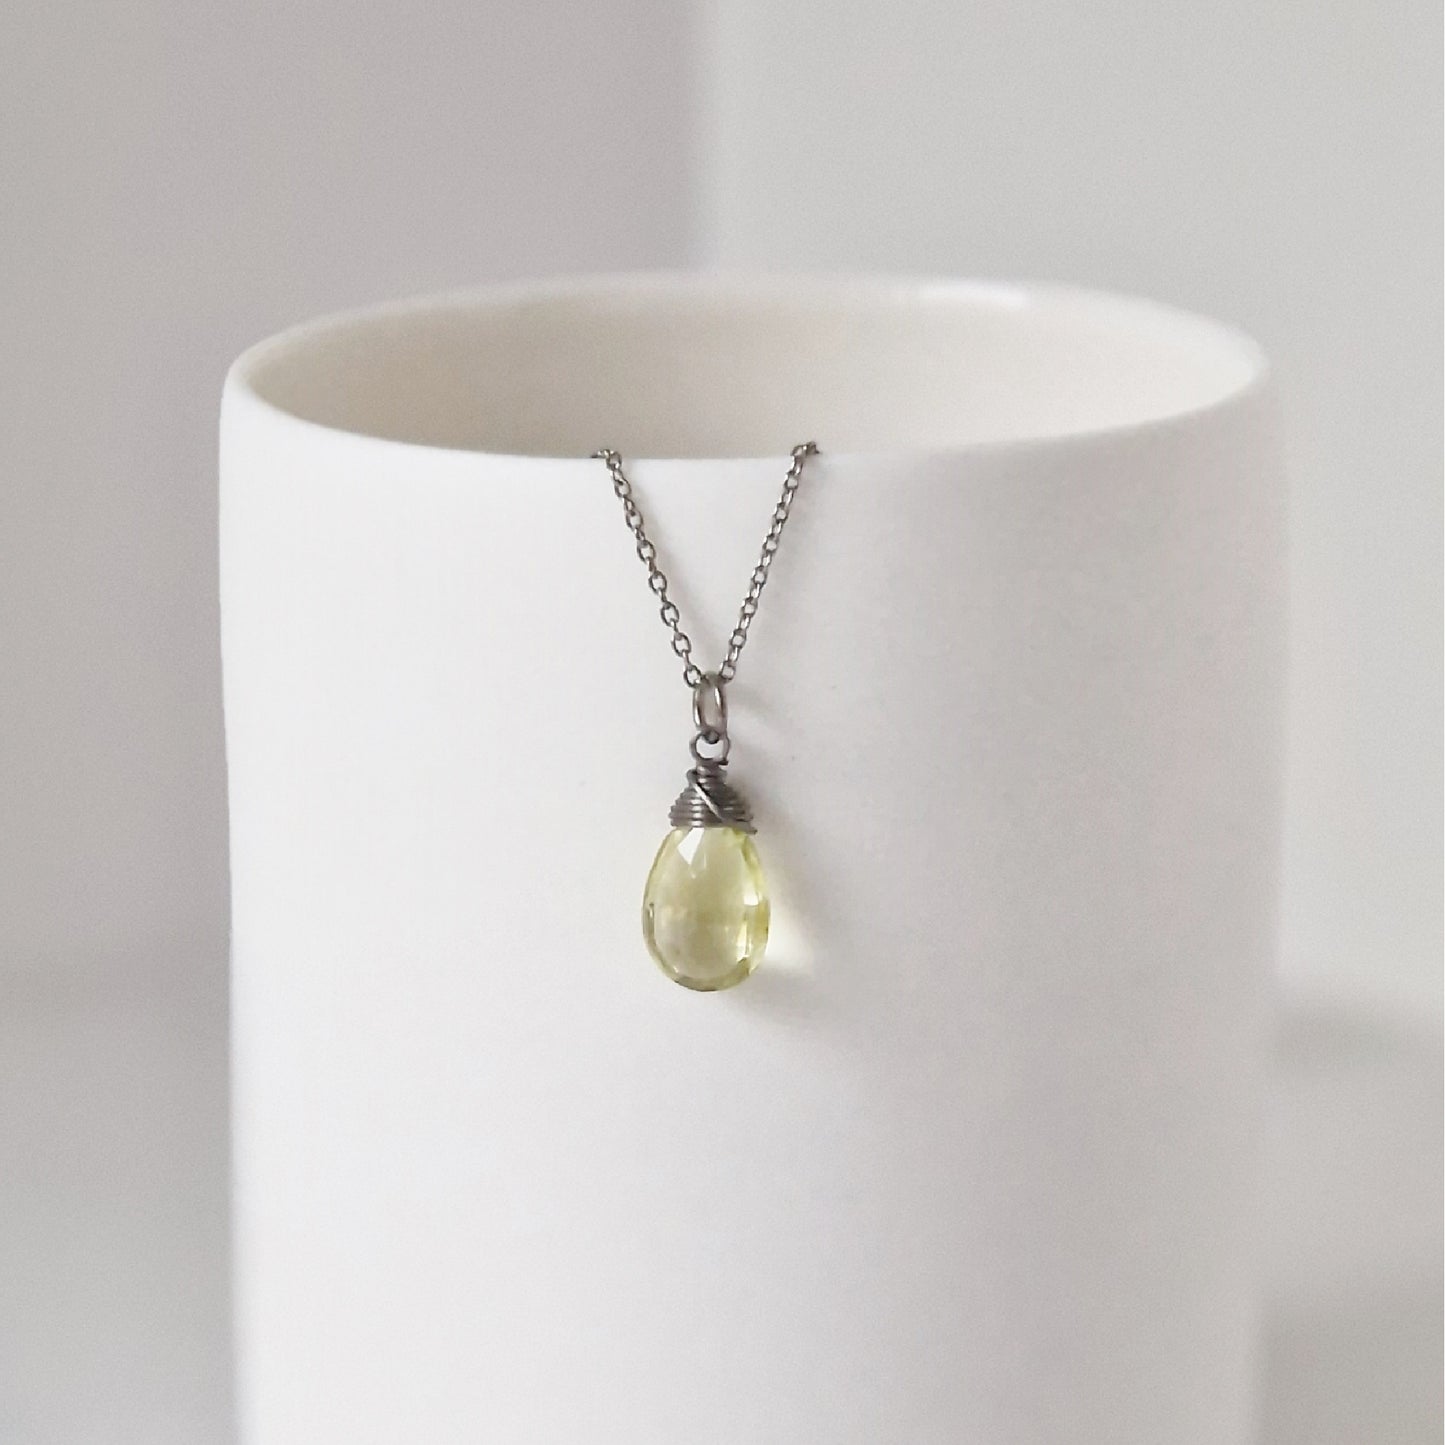 Titanium Necklace with Lemon Quartz